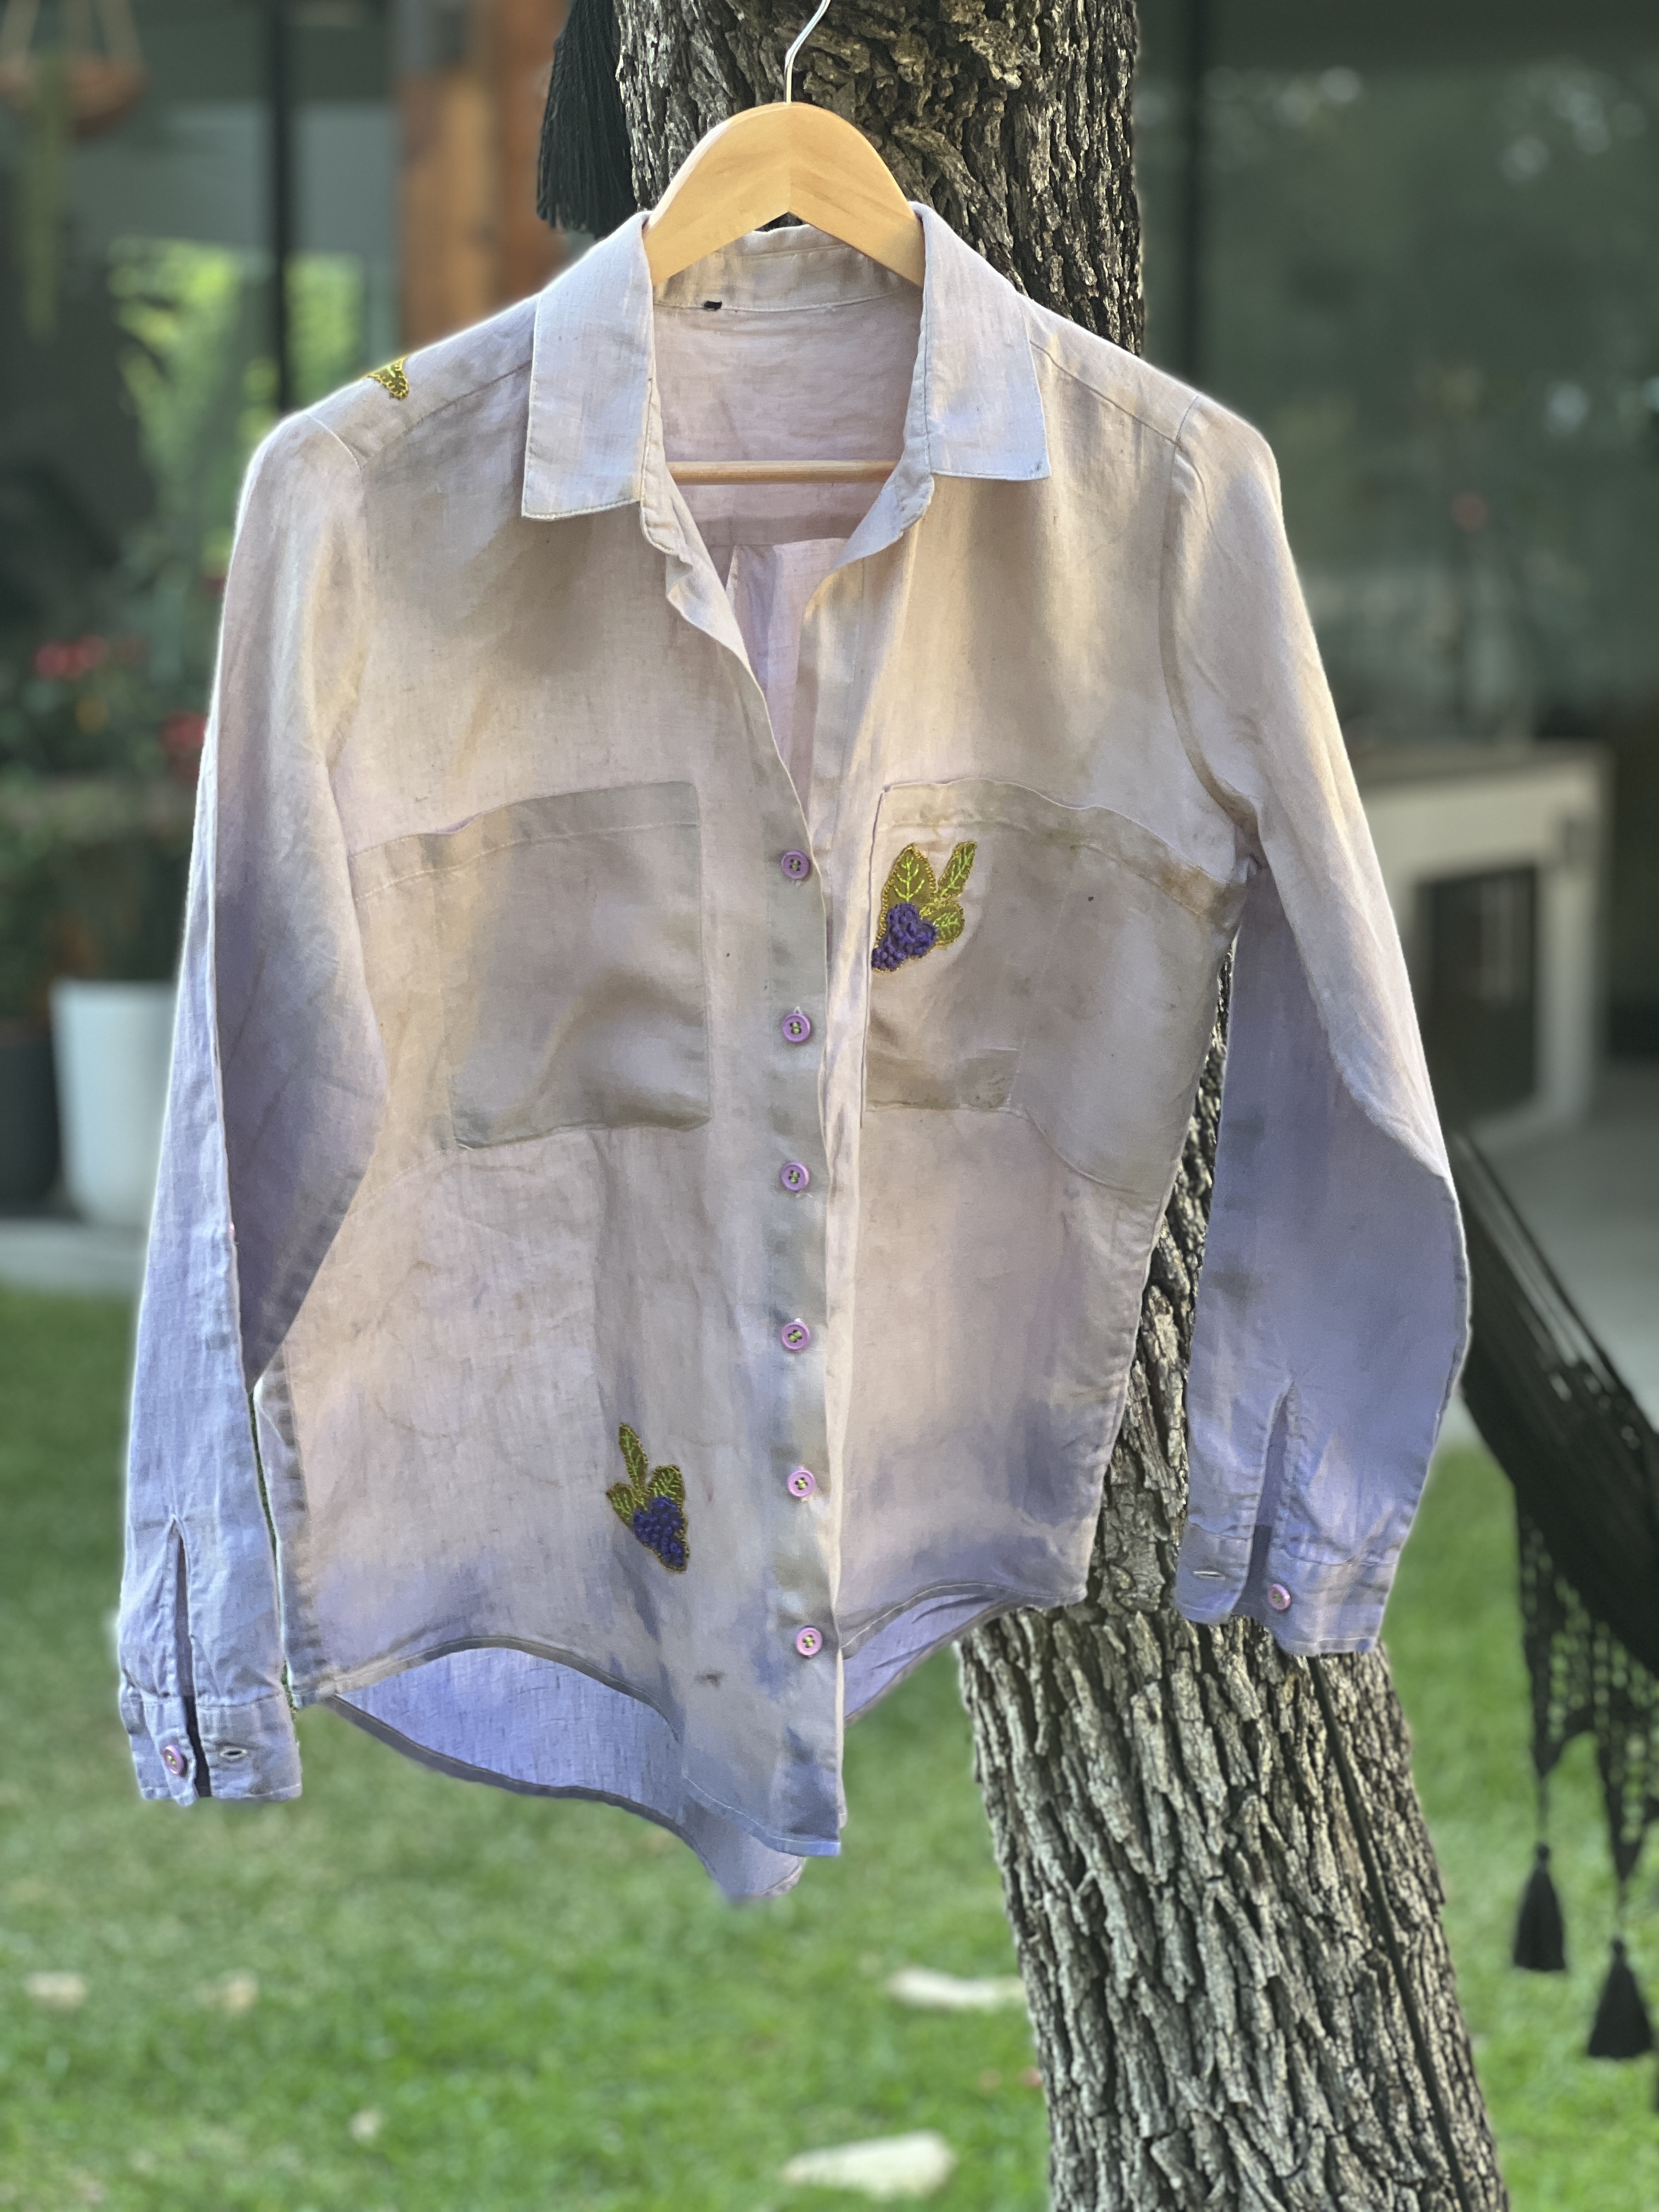 Natural Dyed Shirt Hanging On Tree